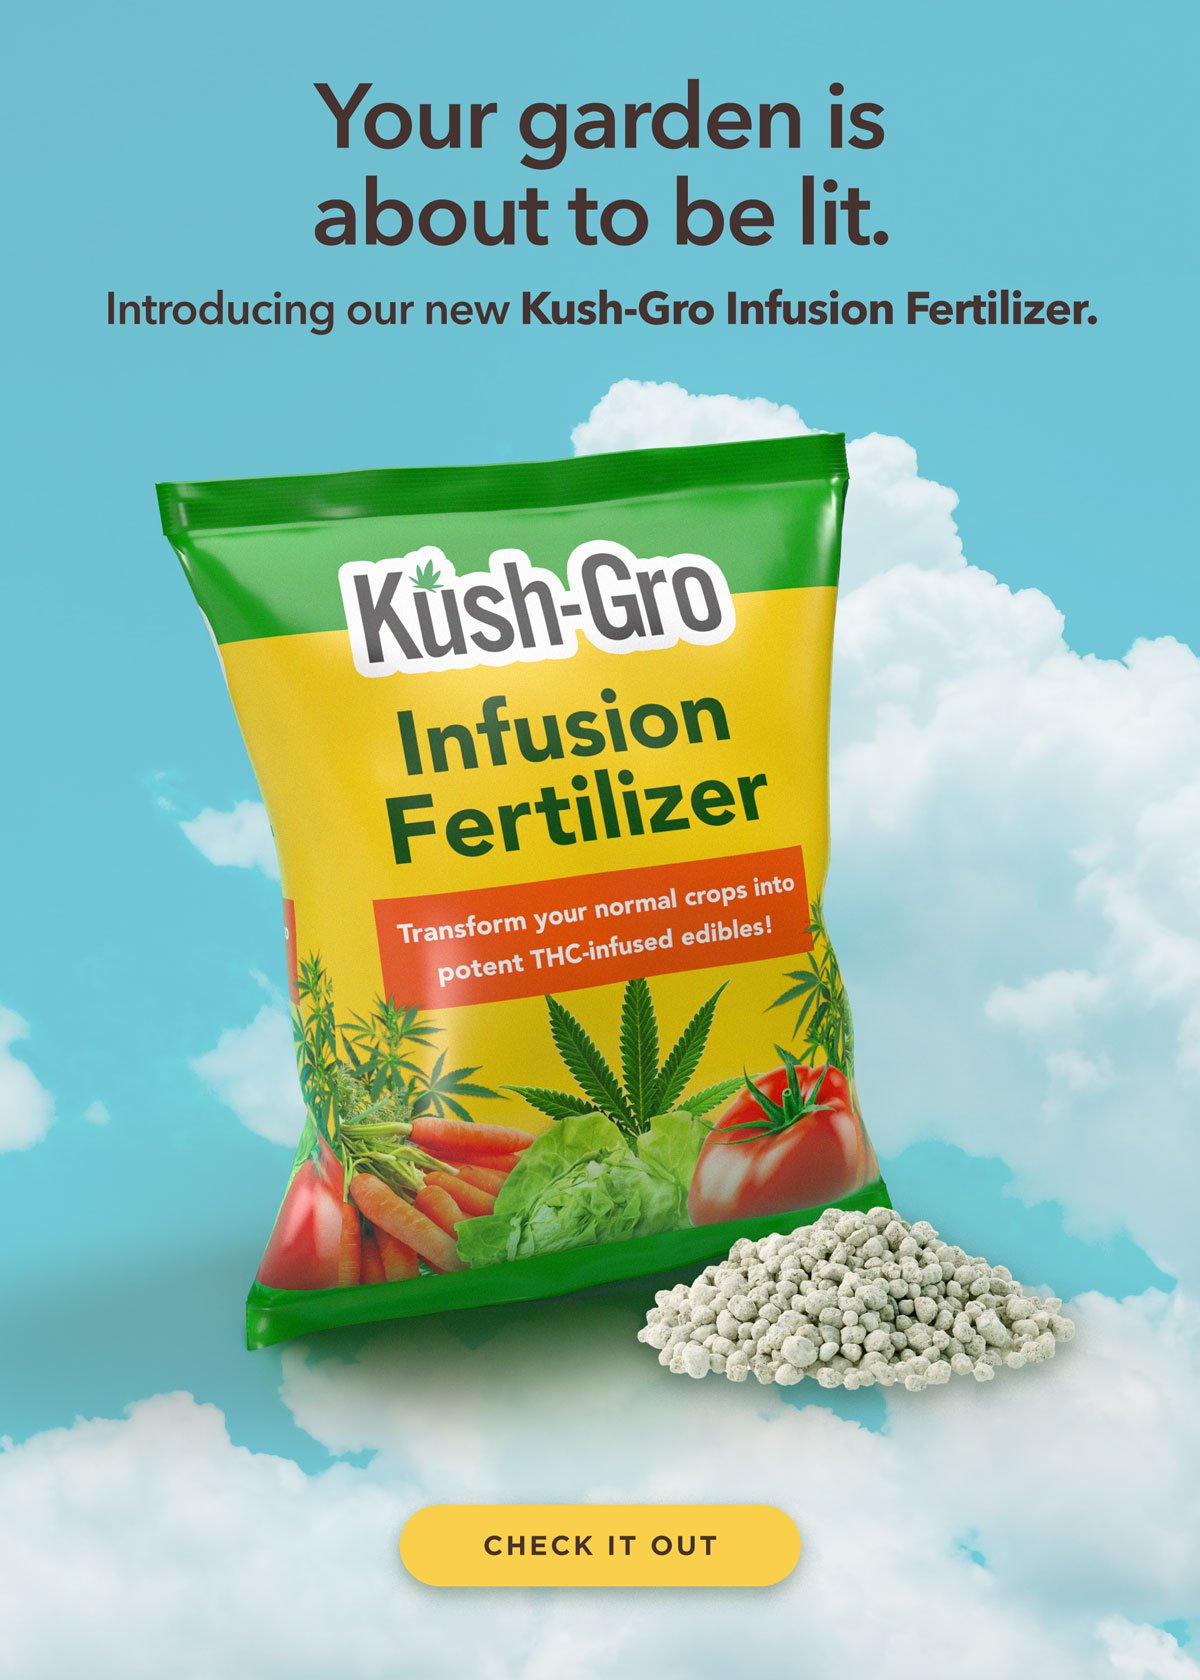 Introducing Kush-Gro Infusion Fertilizer